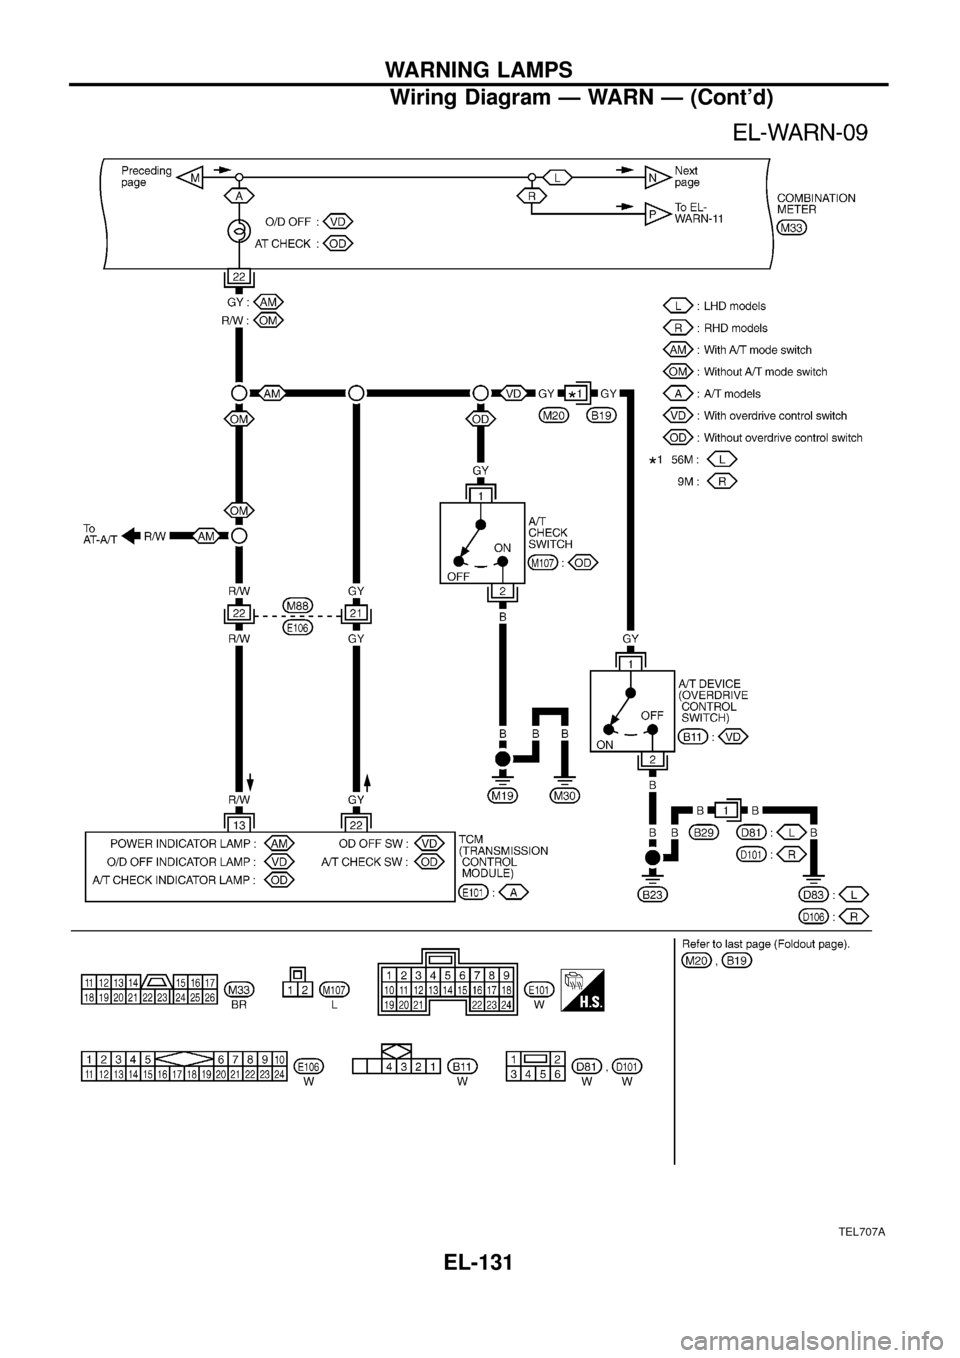 NISSAN PATROL 1998 Y61 / 5.G Electrical System Owners Manual TEL707A
WARNING LAMPS
Wiring Diagram Ð WARN Ð (Contd)
EL-131 